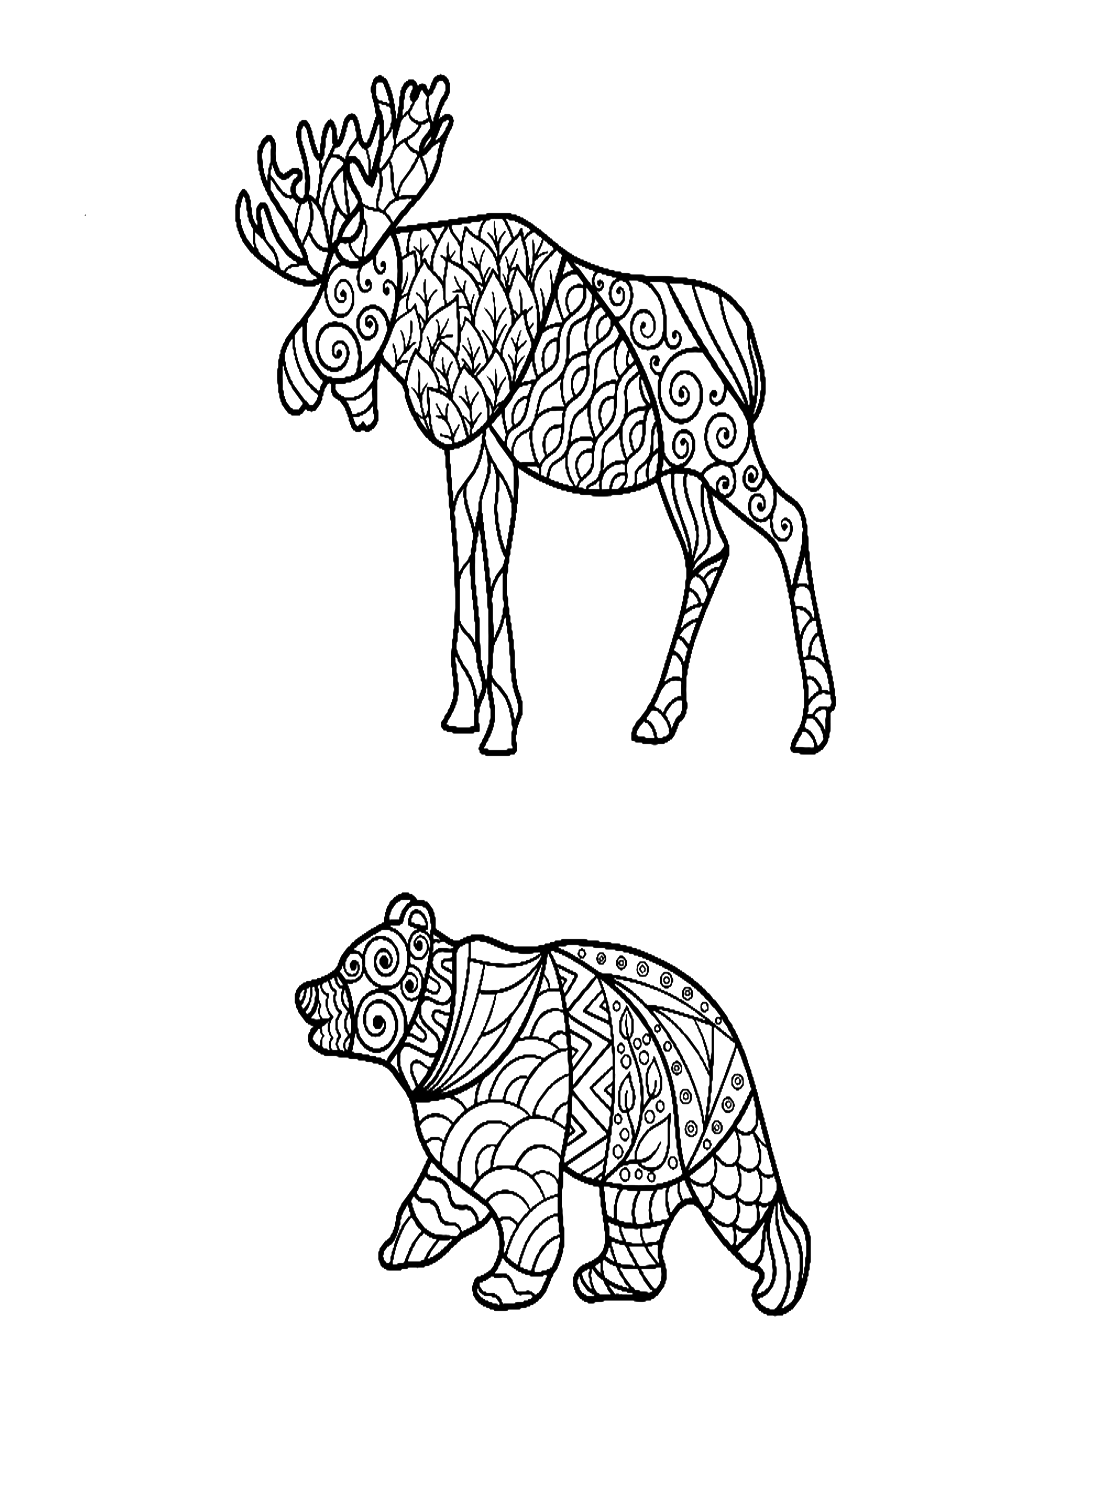 Alce y oso en estilo zentangle de Elk